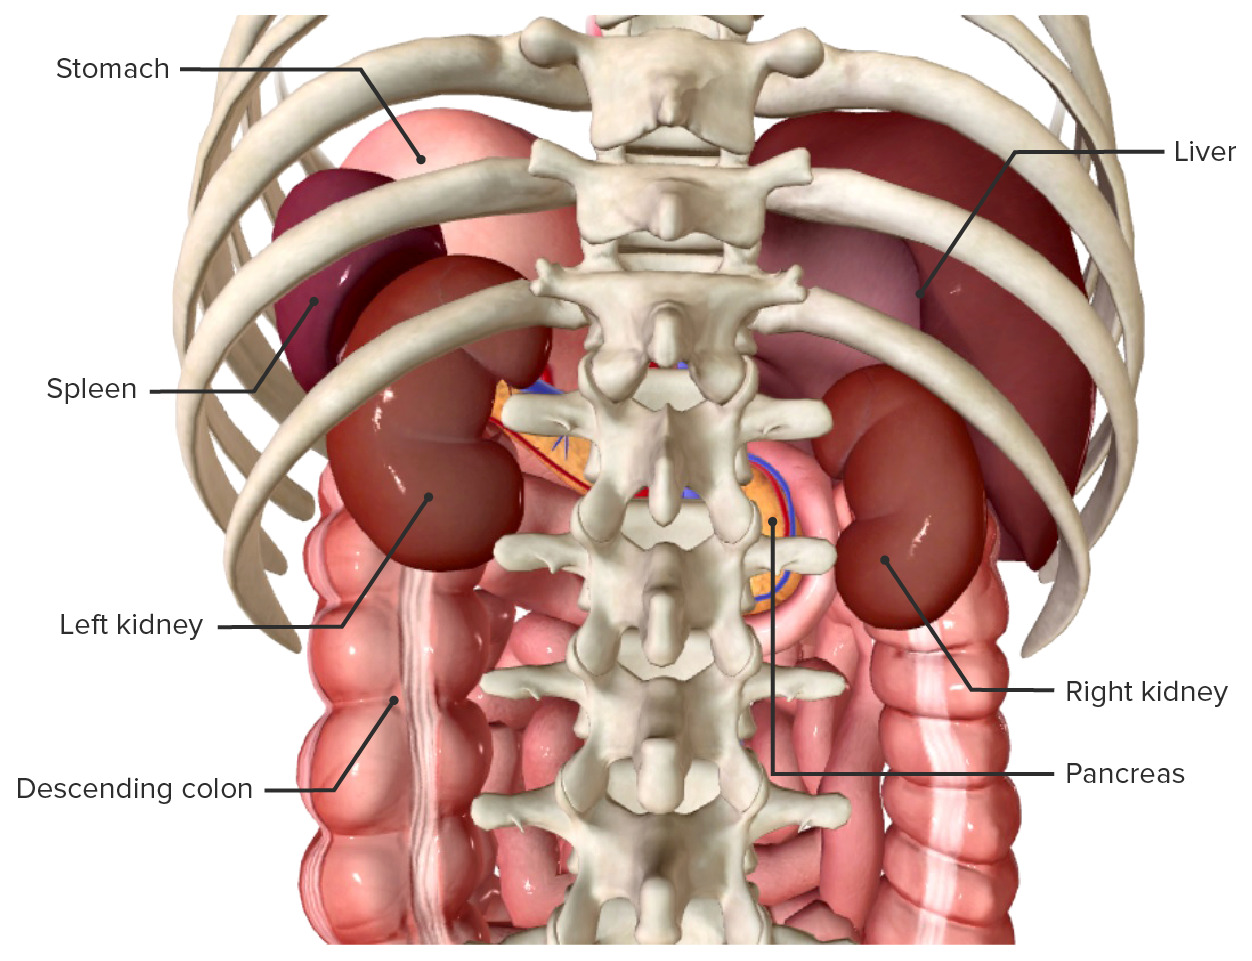 Spleen in situ, posterior view